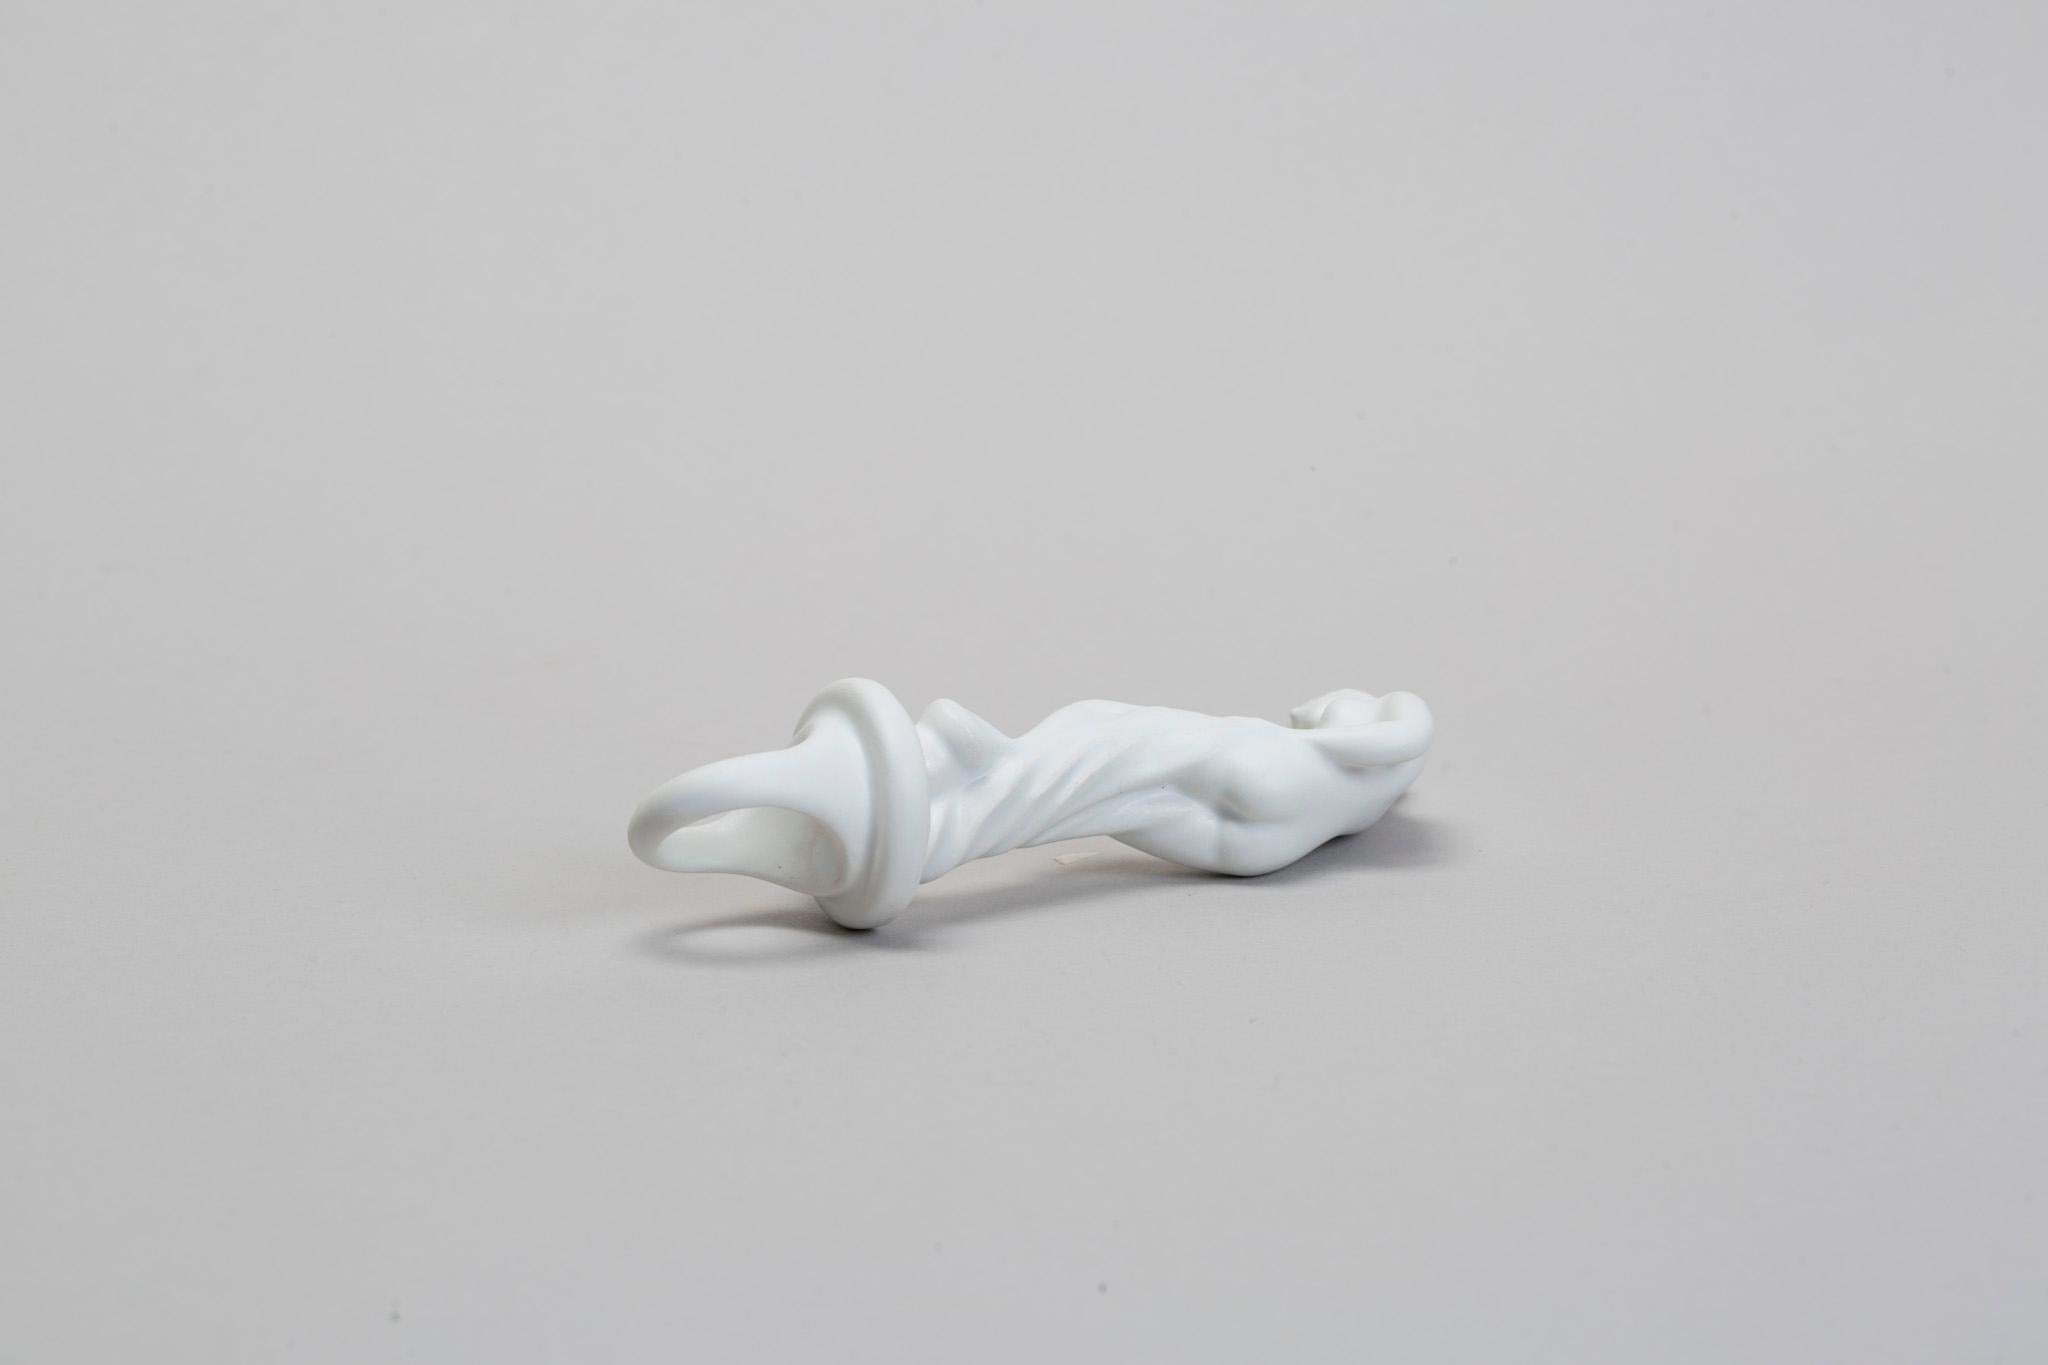 Italian Ceramic Sculptural Ring by Andrea Salvatori Contemporary 21st Century, Art Jewel For Sale